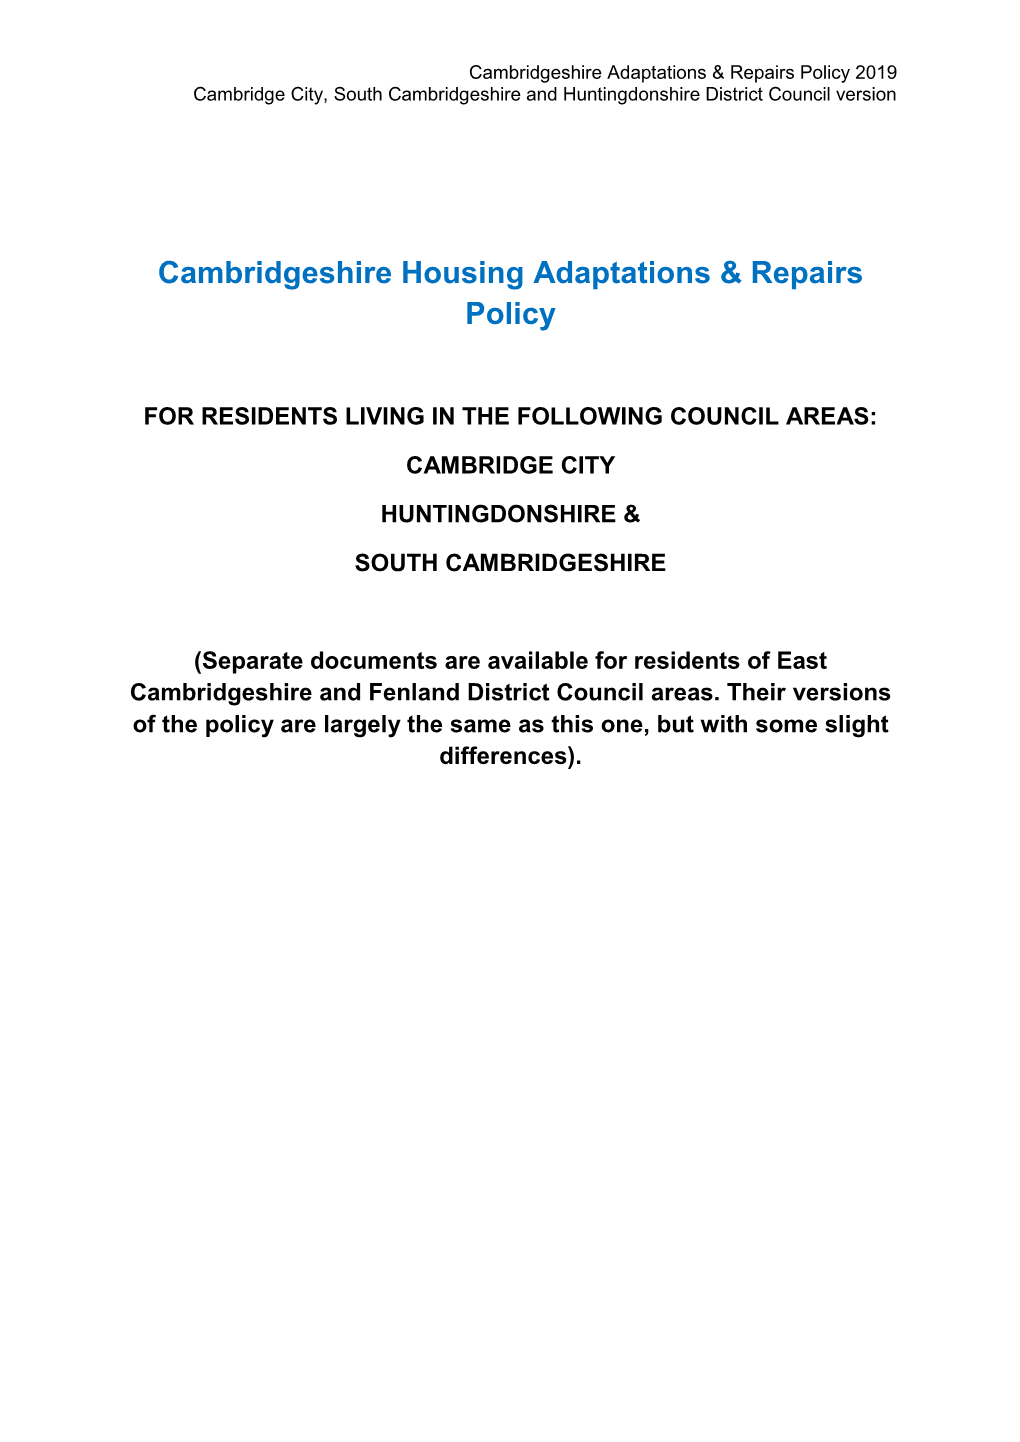 Cambridgeshire Housing Adaptations & Repairs Policy